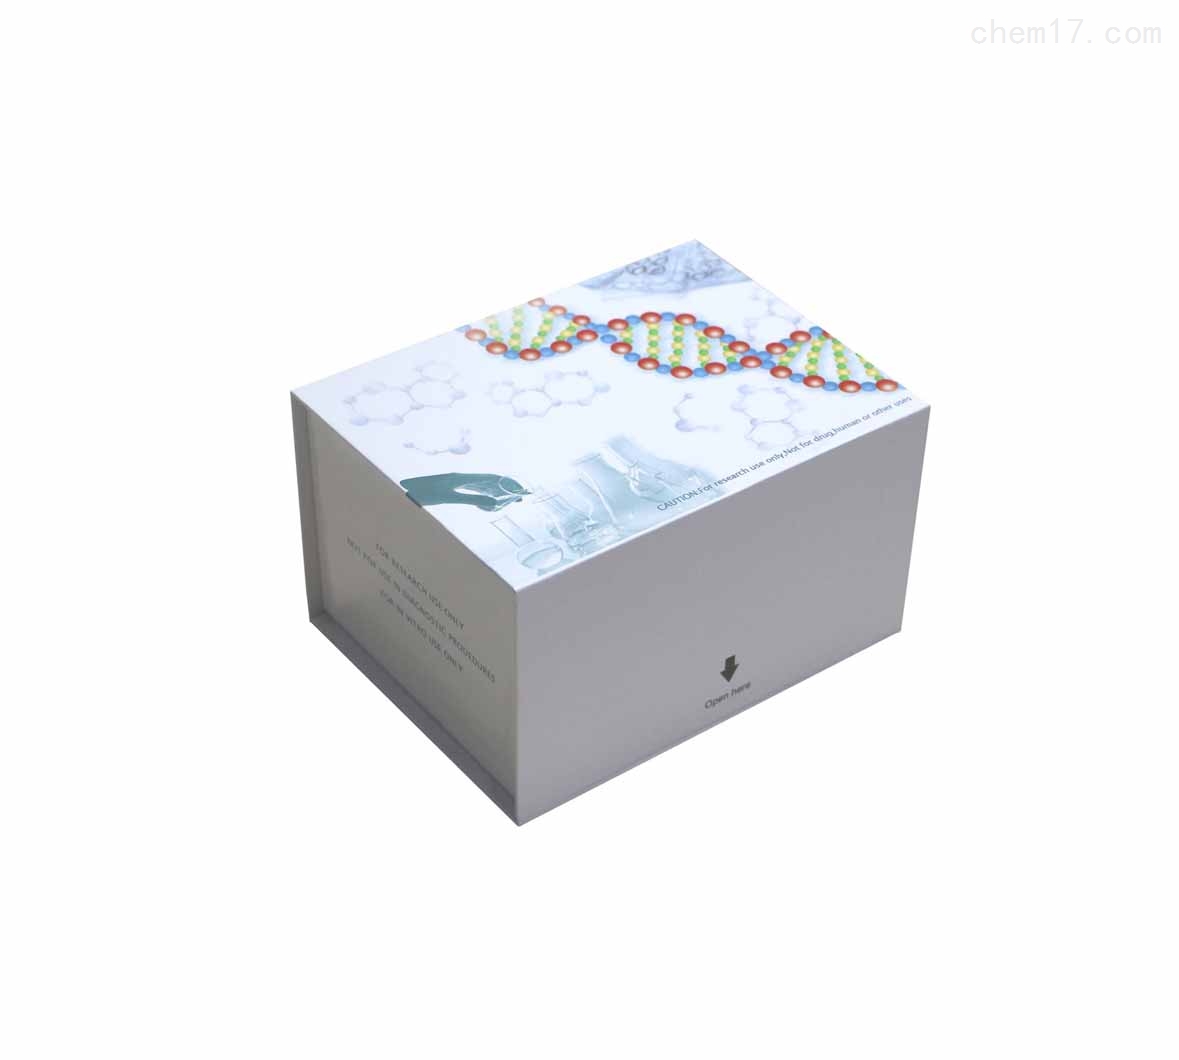 人抗脱氧核糖核蛋白抗体(DNP-Ab)ELISA试剂盒当天发货